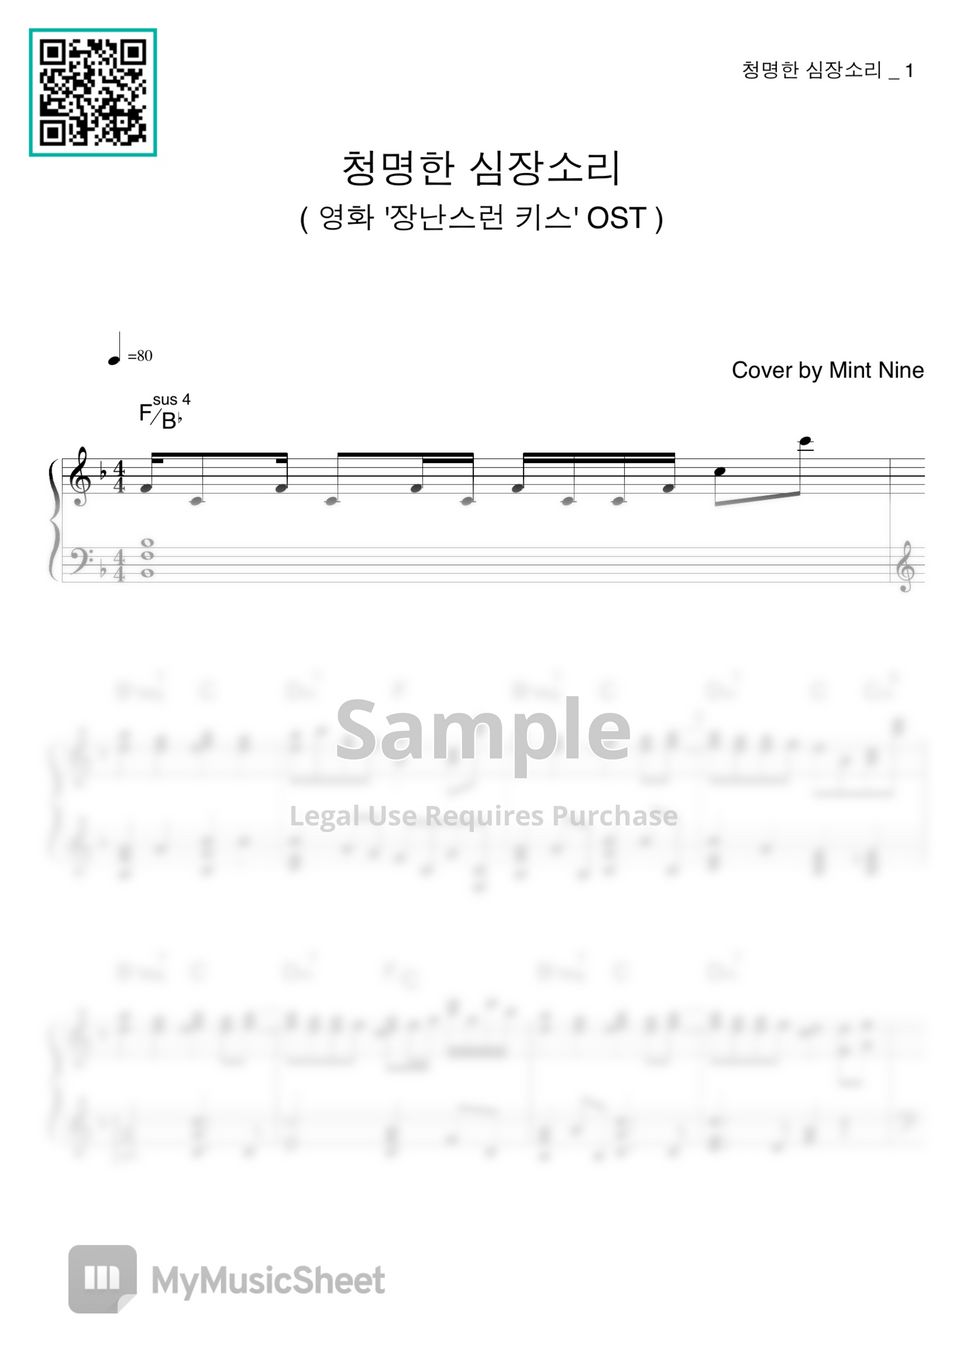 Fall In Love At First Kiss OST (장난스런 키스 OST) - Proof Of My Heartbeat (청명한 심장소리) by Mint Nine